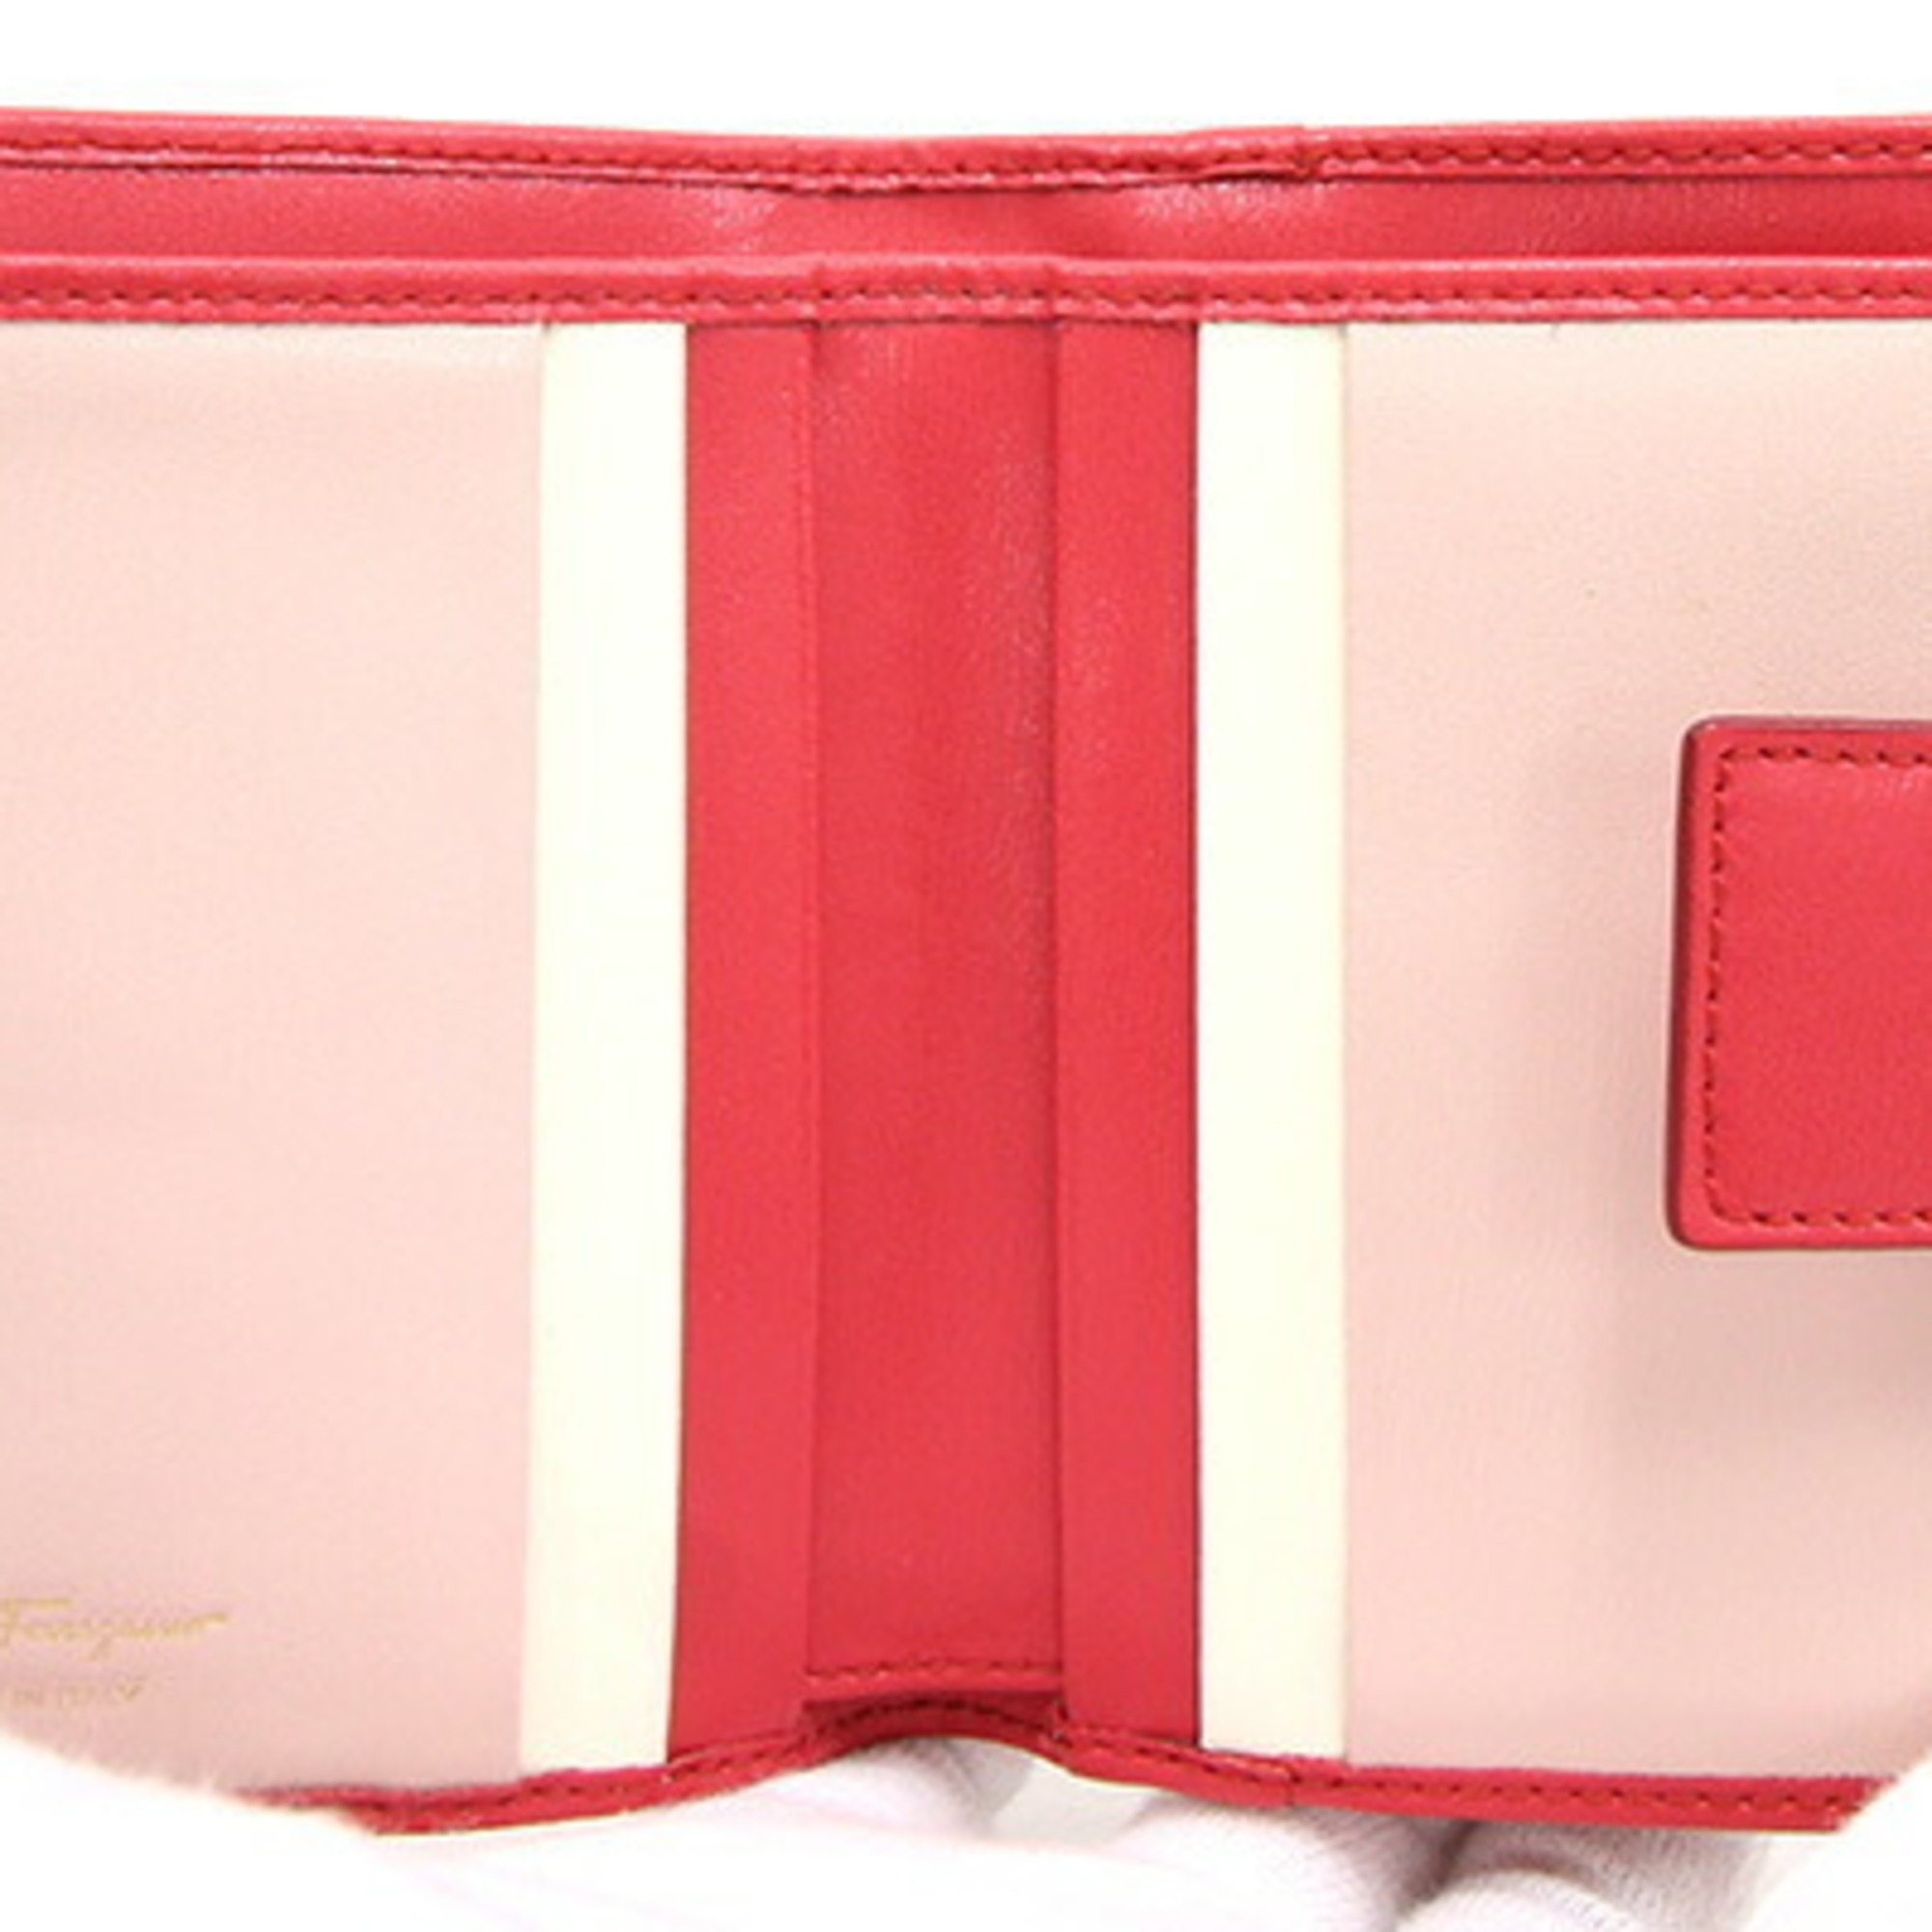 Salvatore Ferragamo Ferragamo W Wallet Gancini GJ-22 C844 Red Leather Folding Compact Ladies Salvatore